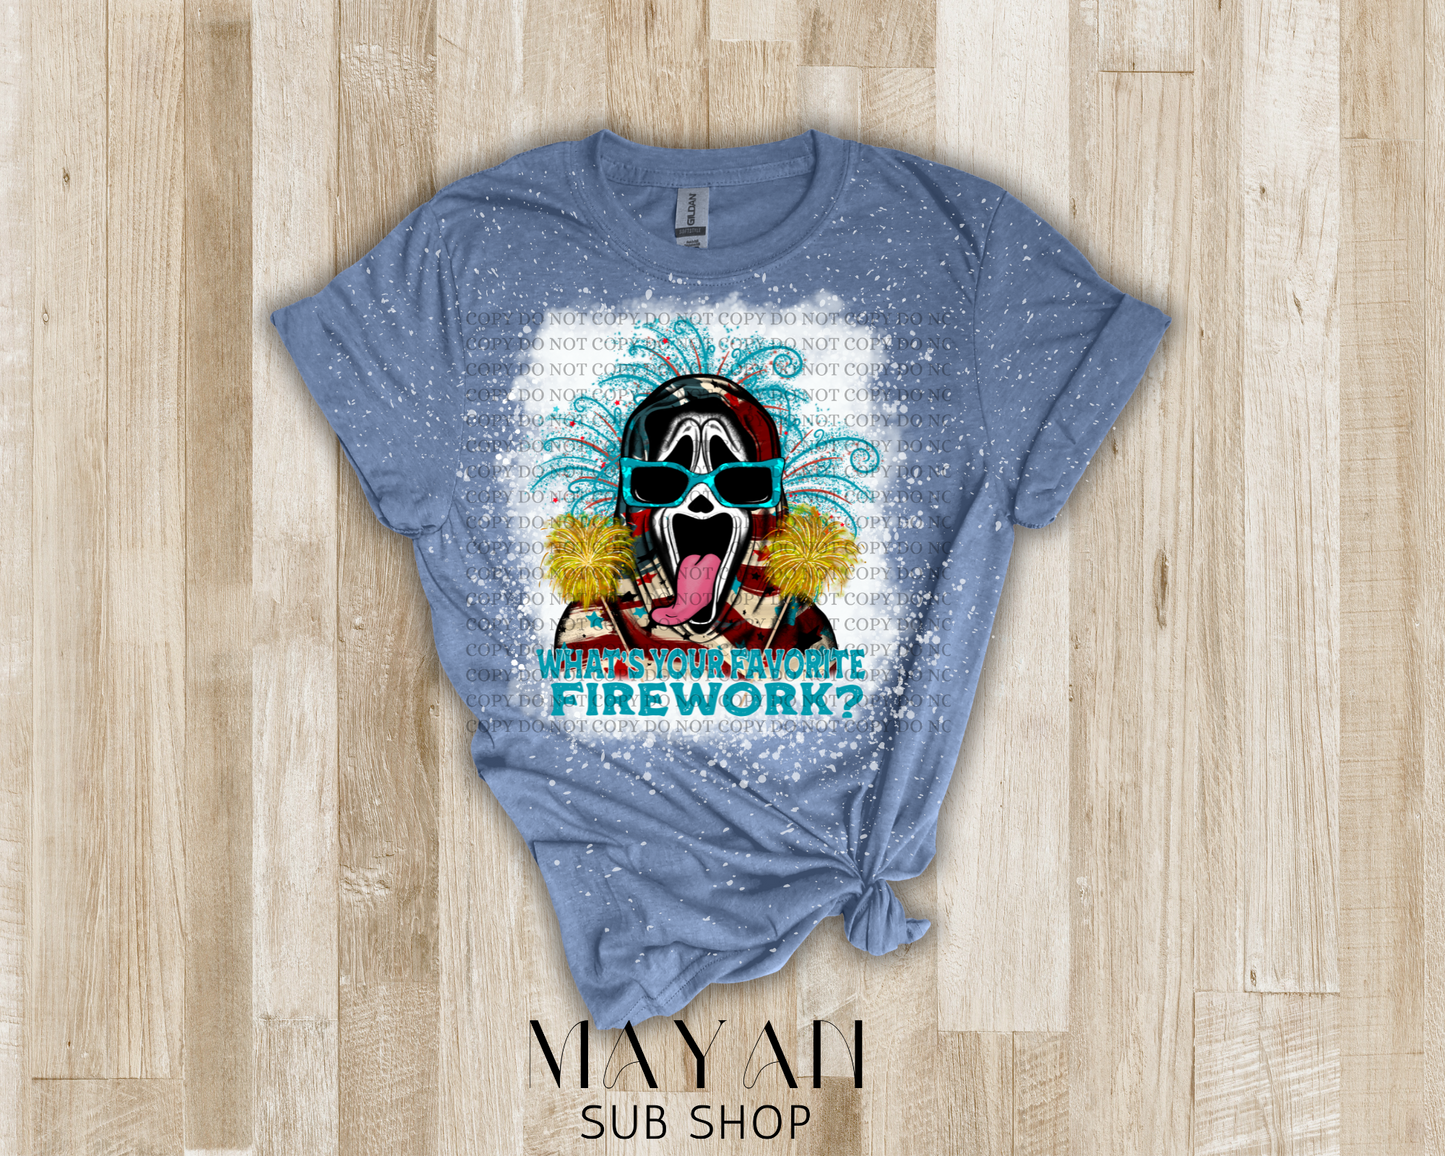 Favorite fireworks bleached shirt - Mayan Sub Shop